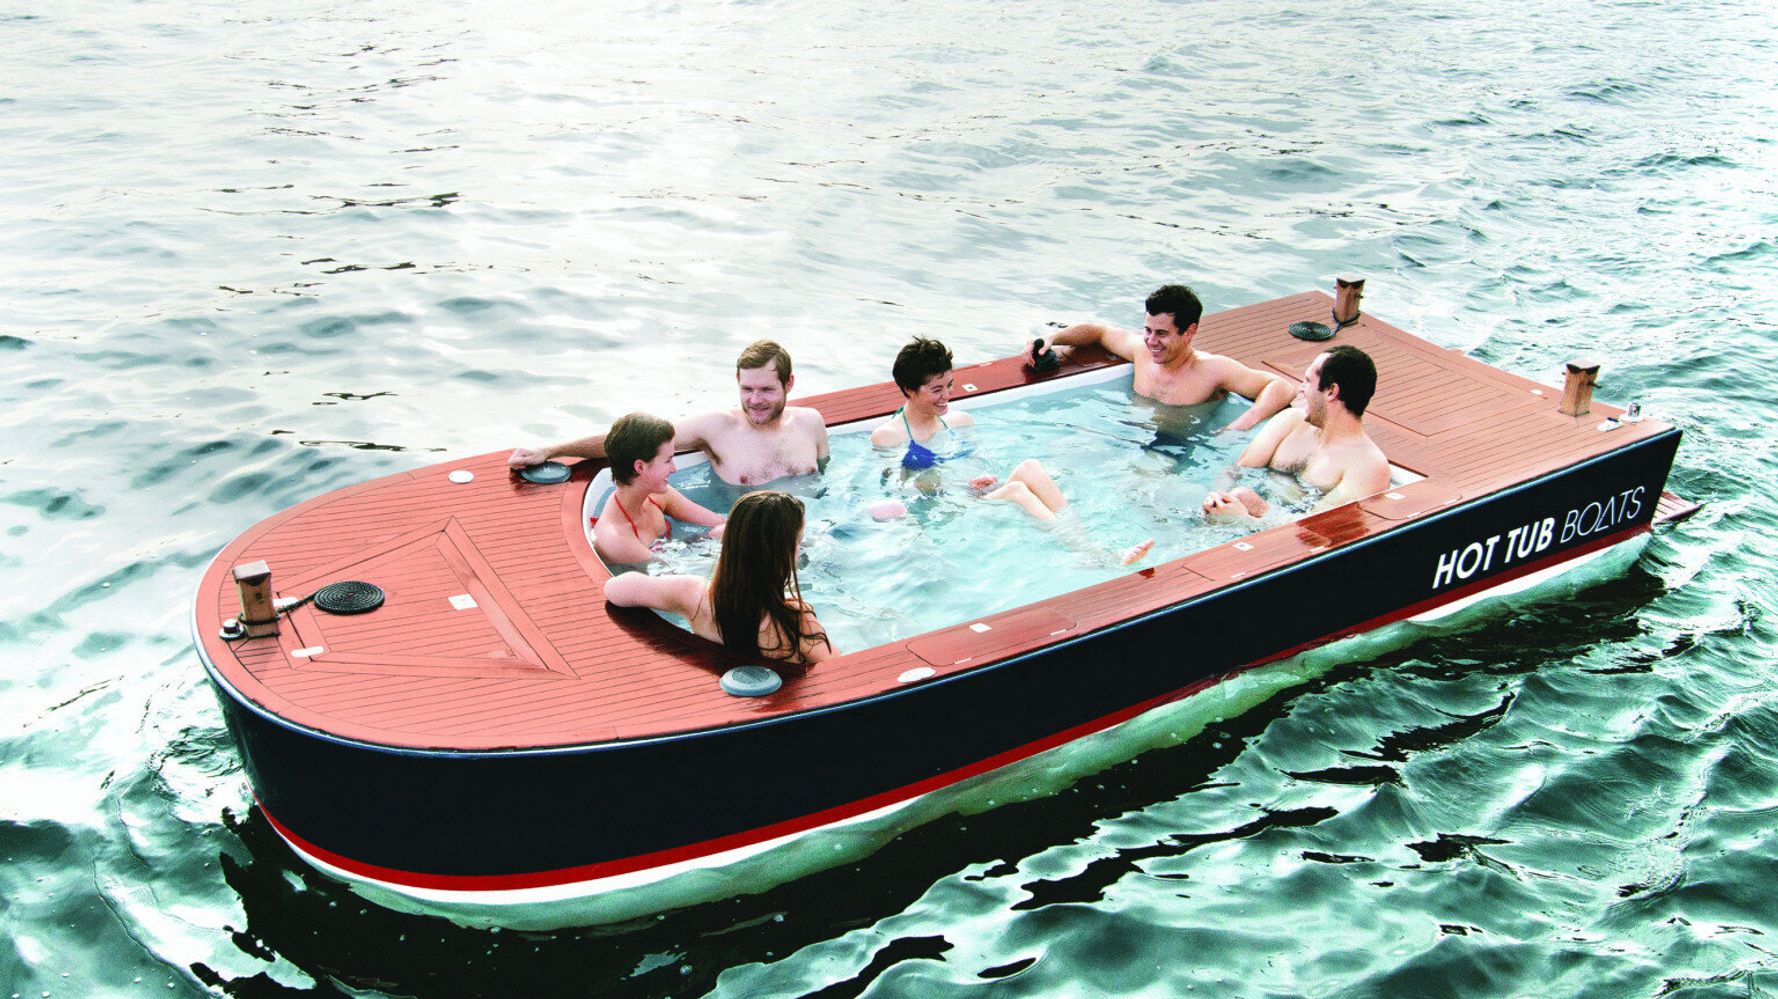 Travel Hot Tub Boat Latest Luxury Holiday Accessory